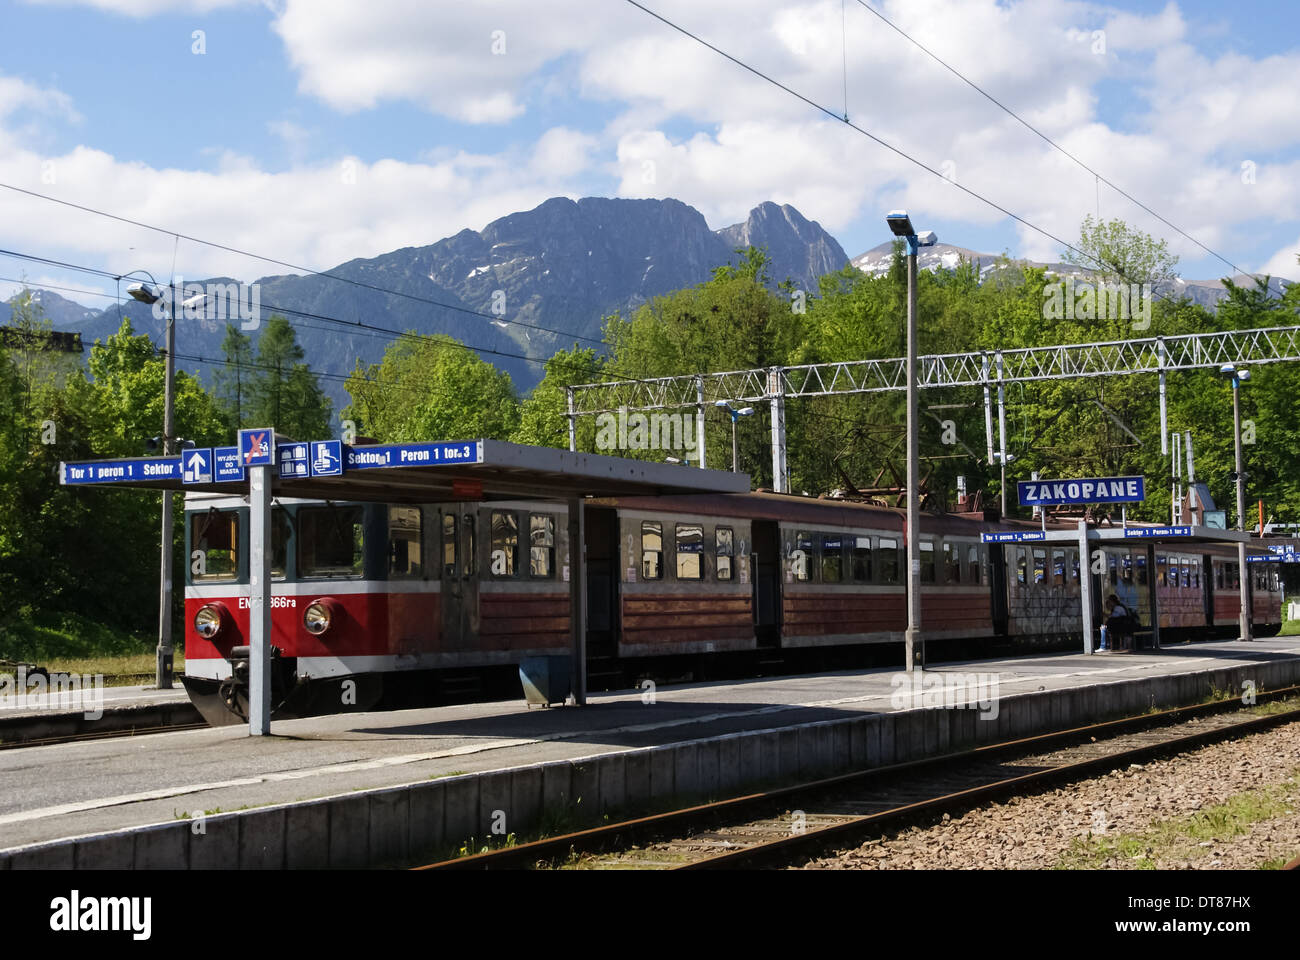 Train at main railway station in Zakopane Tatra Mountains Poland Stock Photo